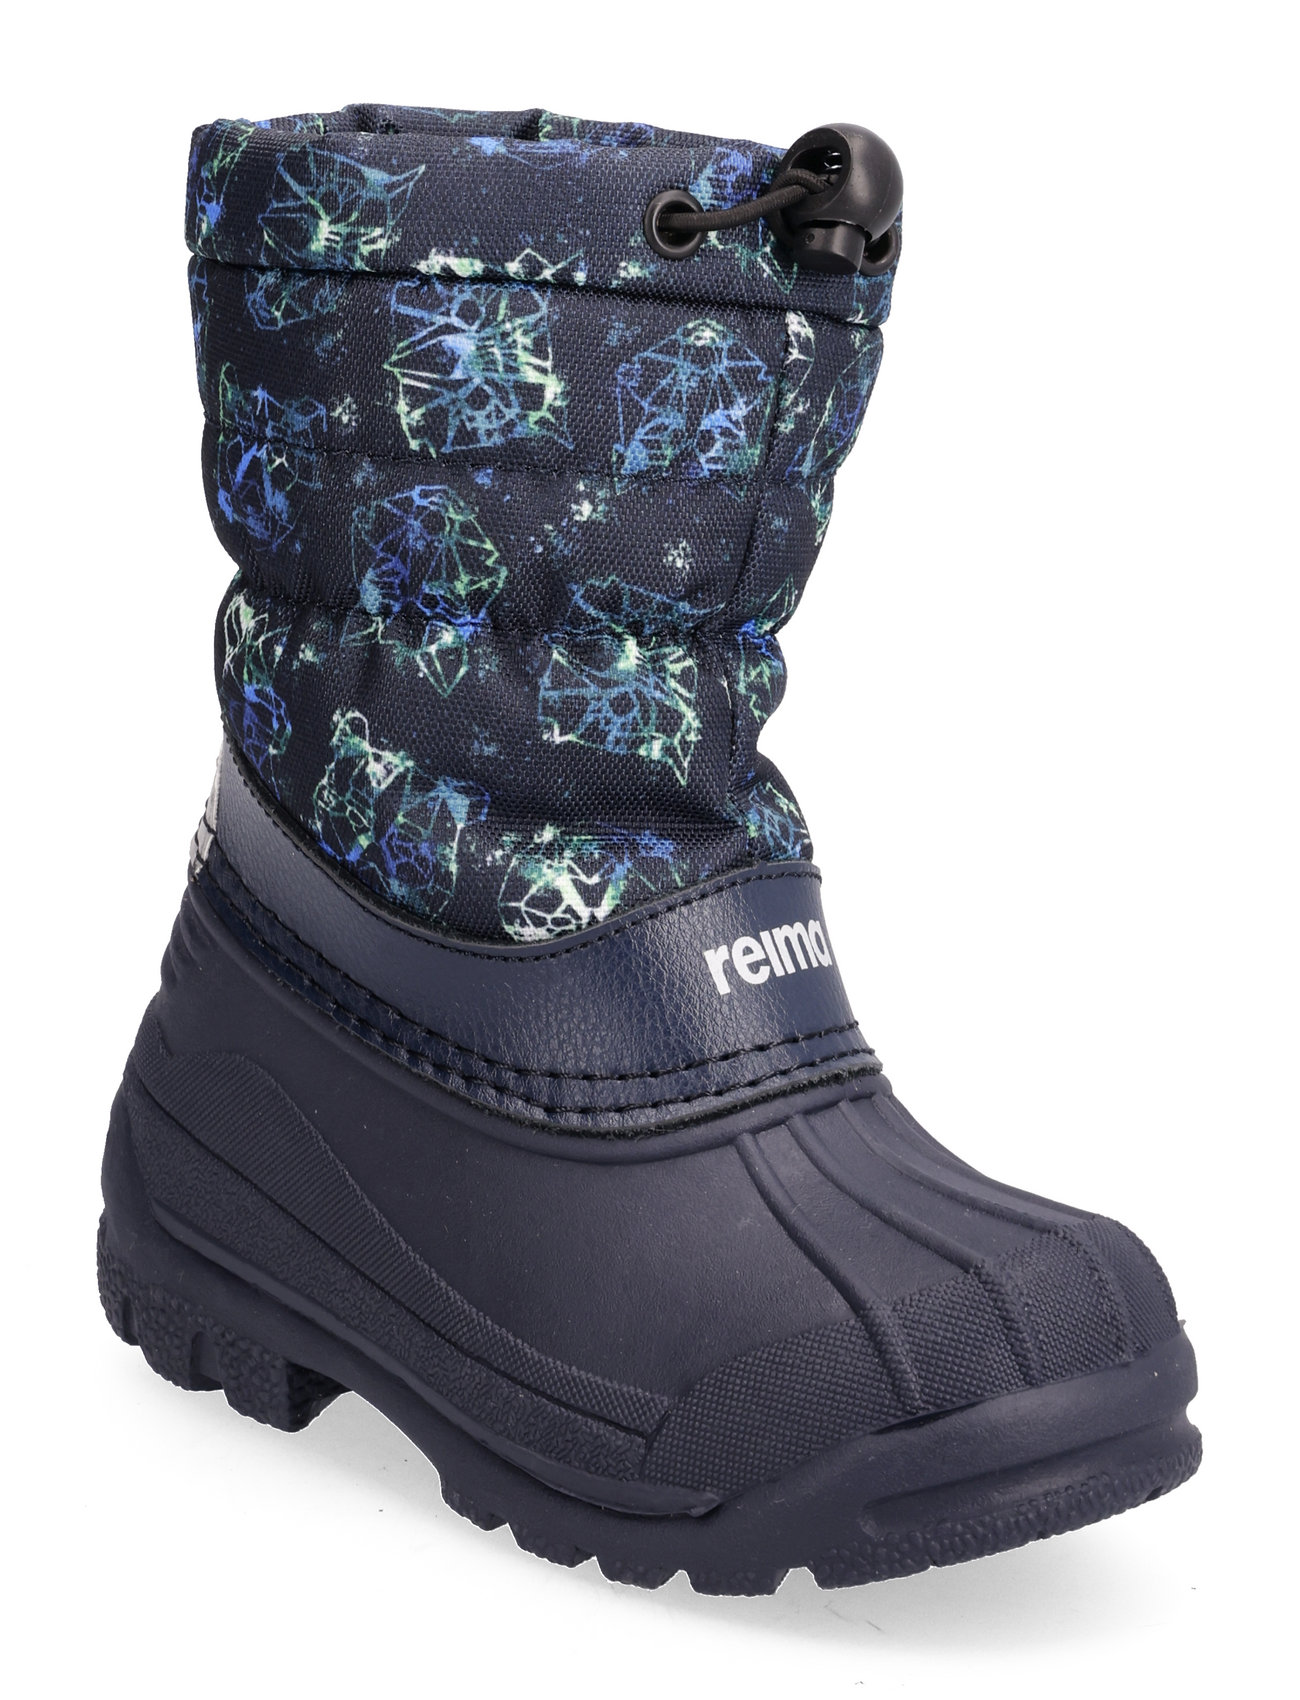 Triumferende lustre Ondartet Reima Kids' Snow Boots Nefar - Winter boots - Boozt.com